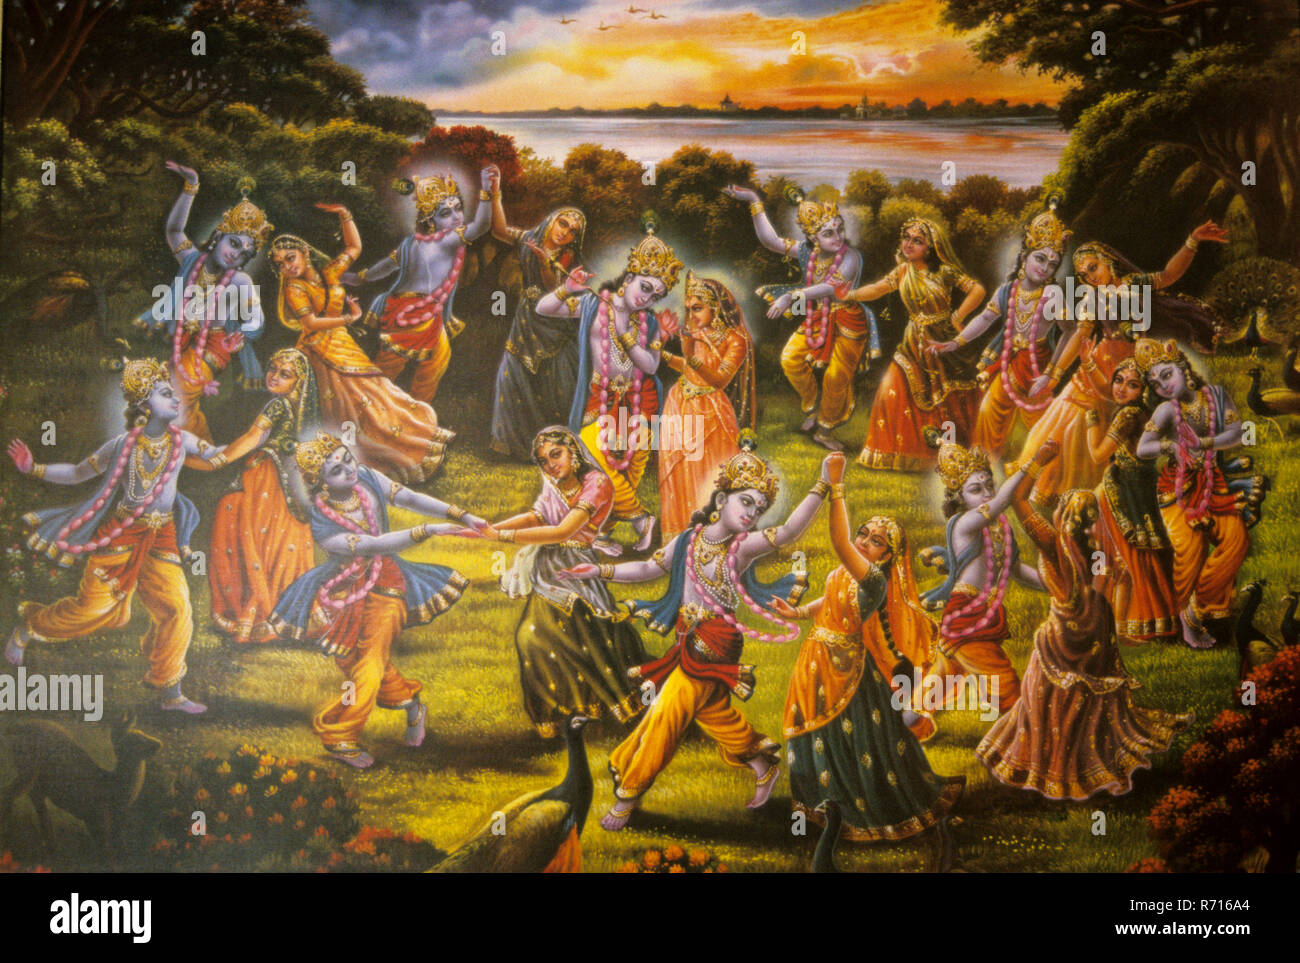 Painting of Lord Krishna and Radha dancing with Gopies Vrindavan Mathura India Stock Photo